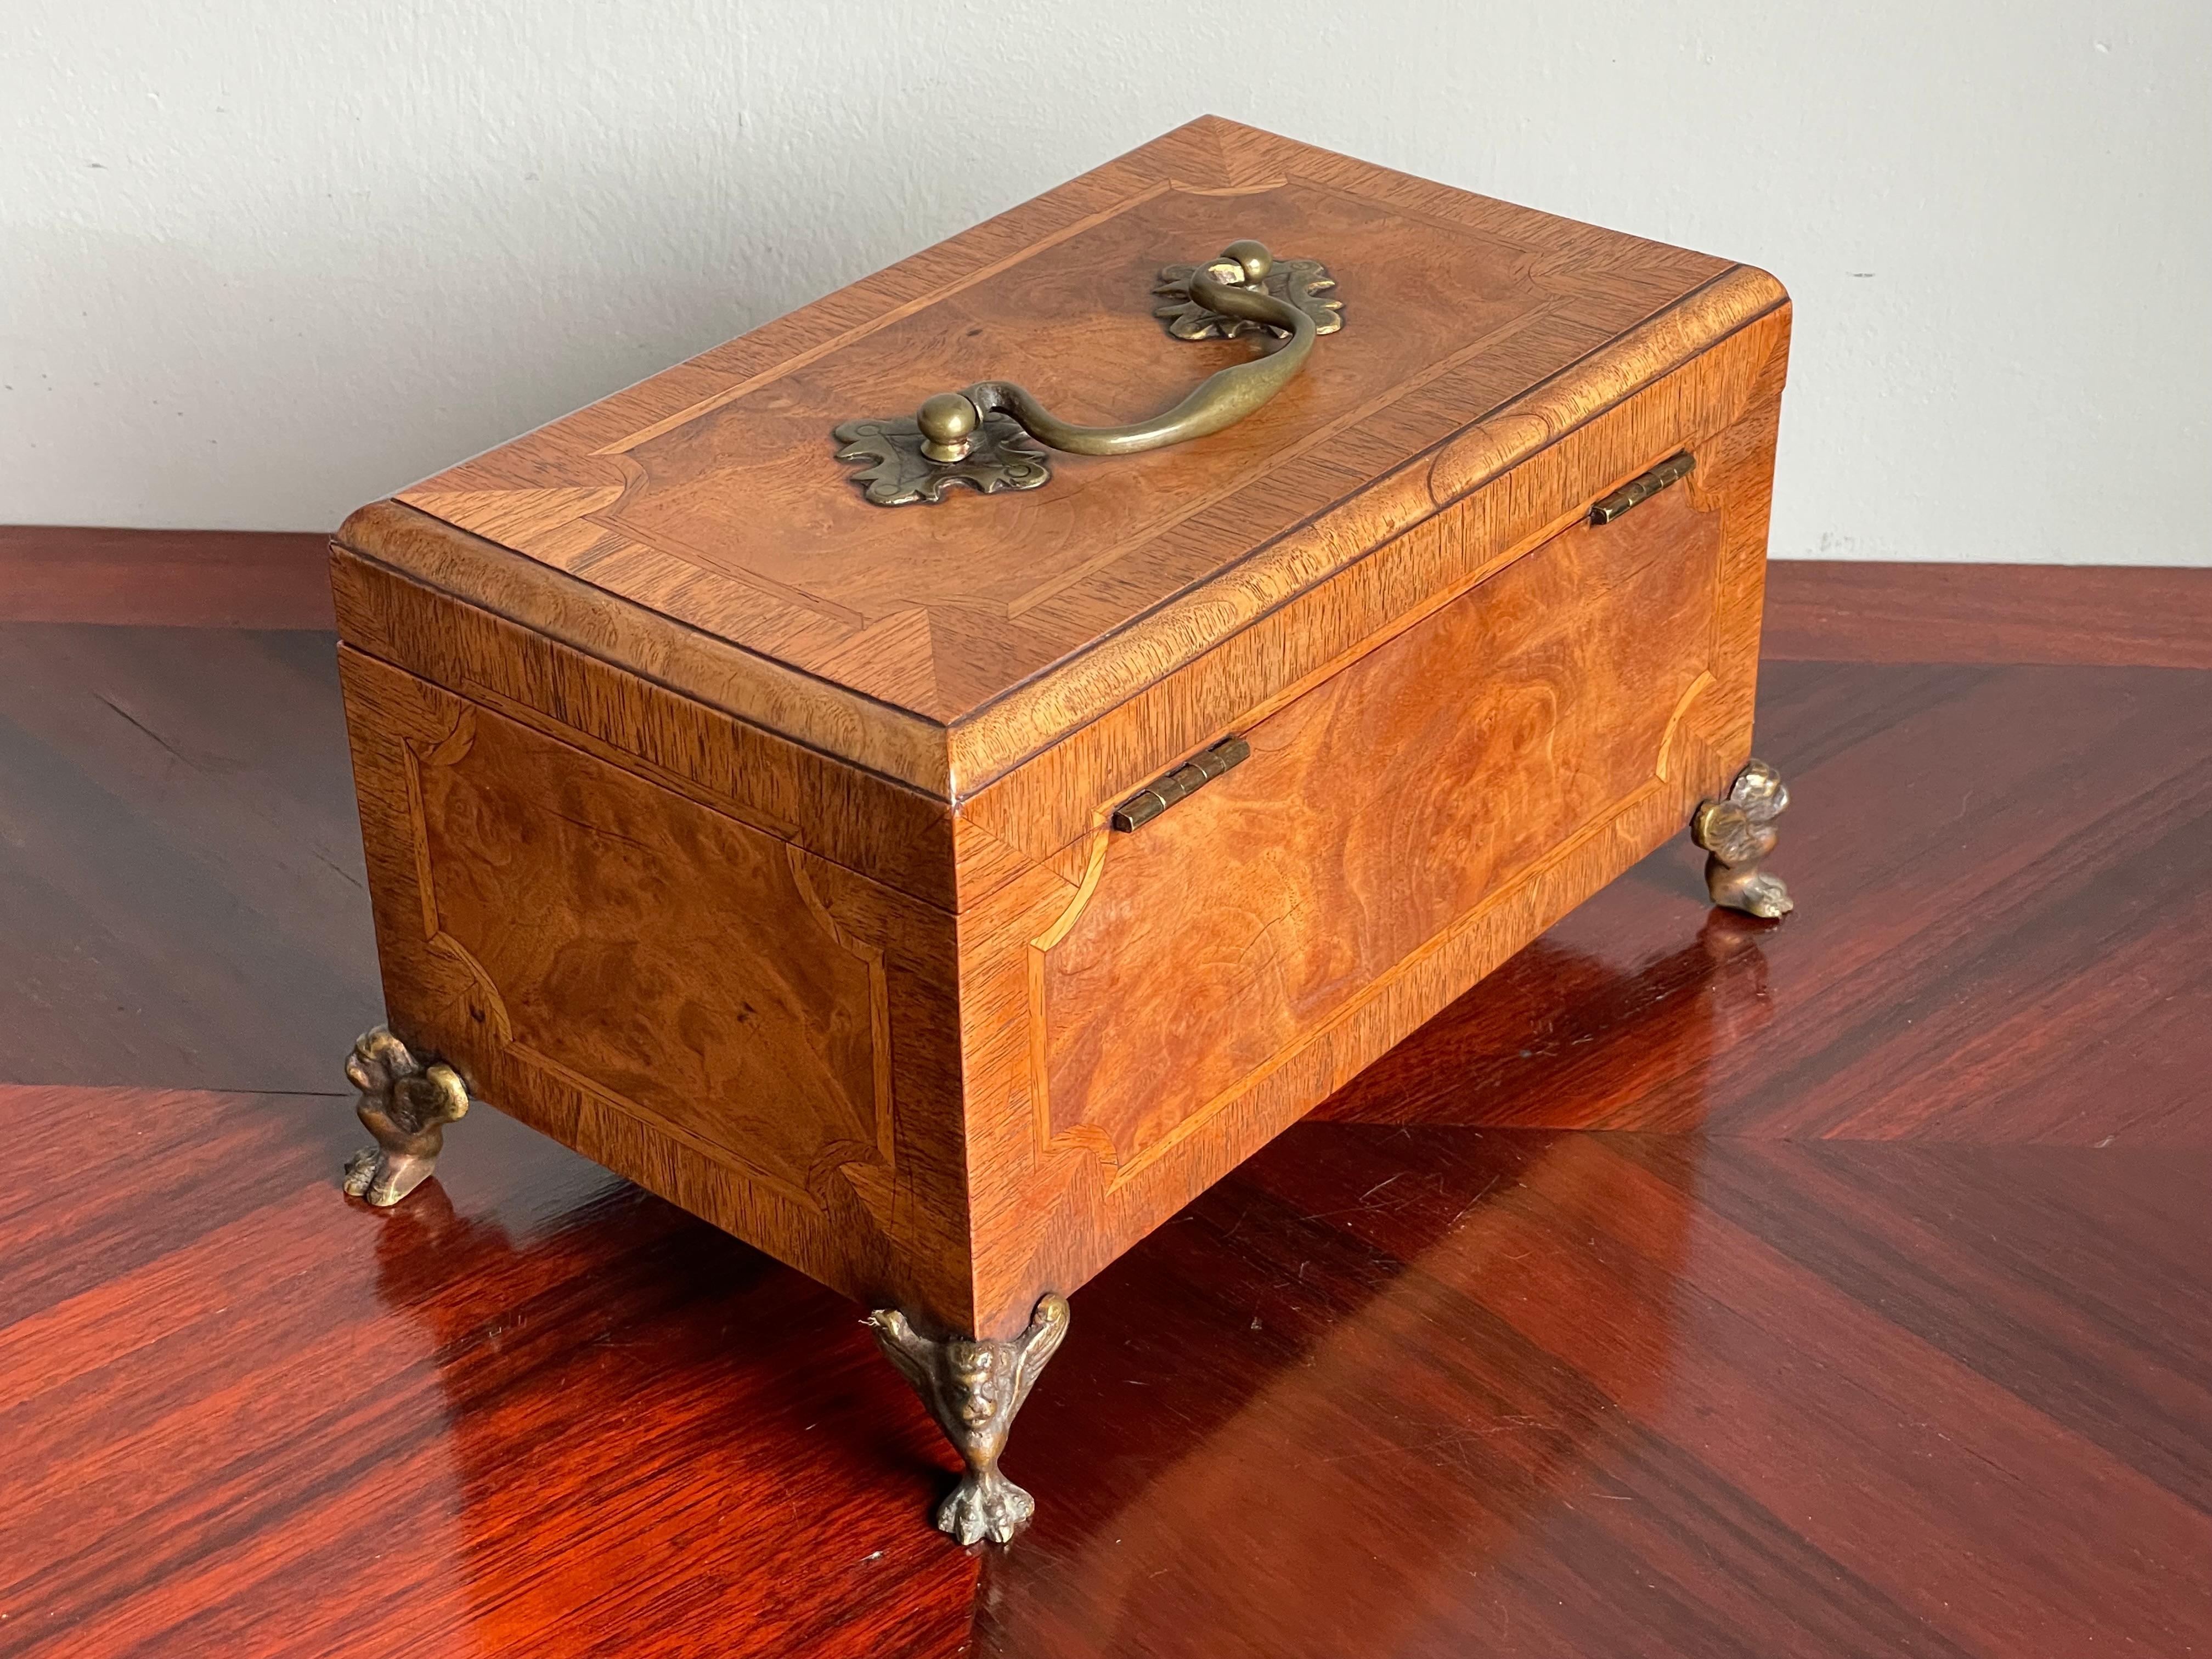 Cast Stunning Late 1800s Walnut, Burl Walnut & Bronze Jewelry Box with a Great Patina